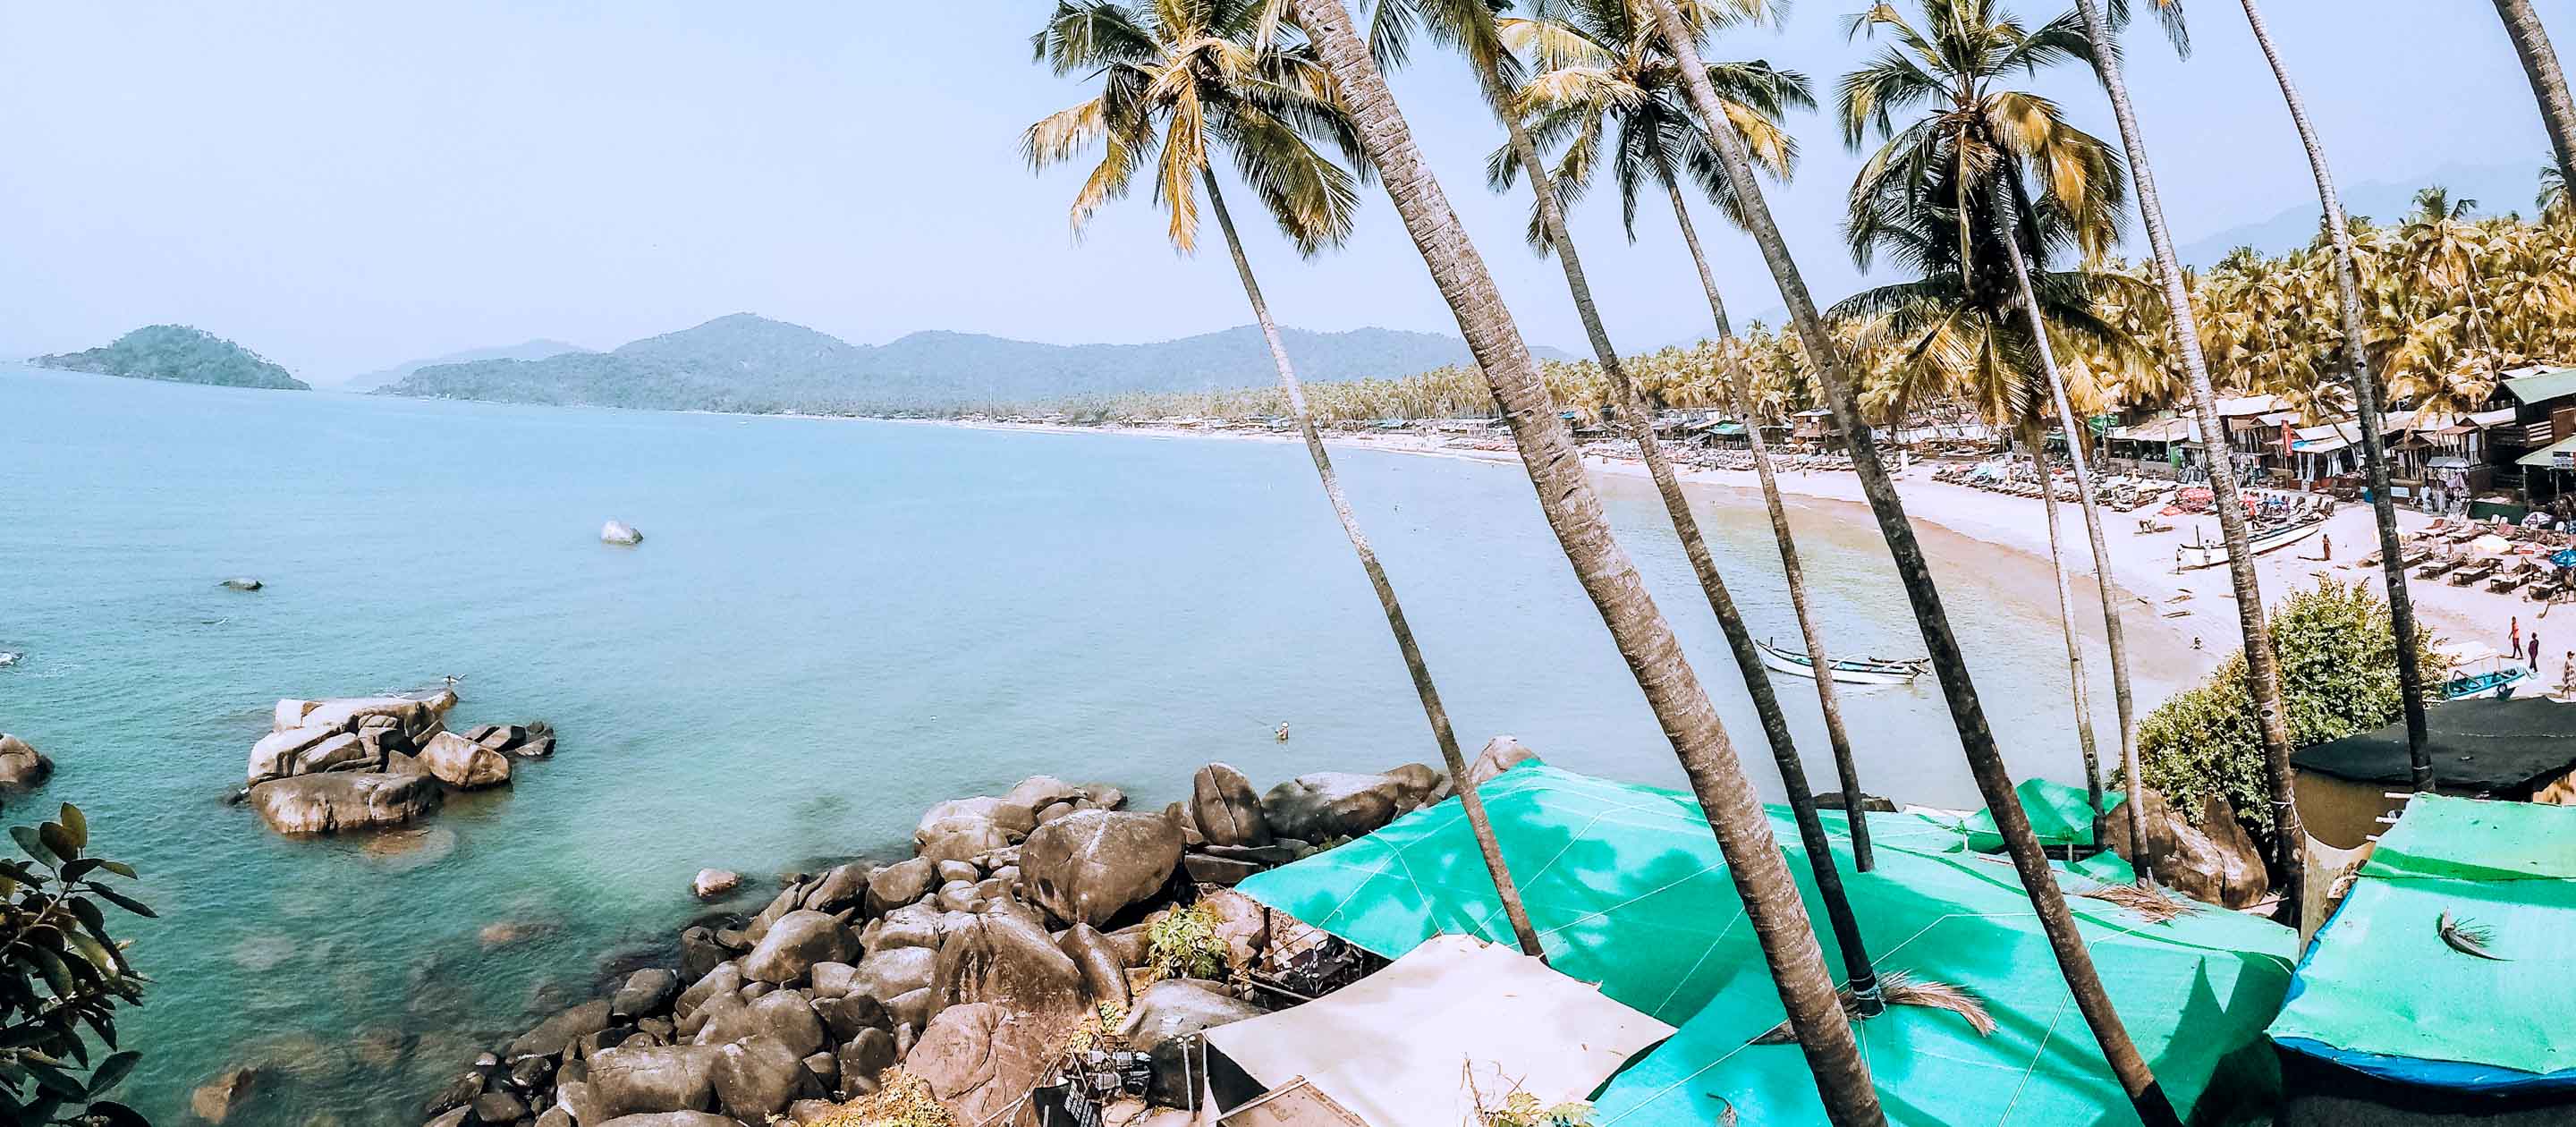 View of beach in Goa, India